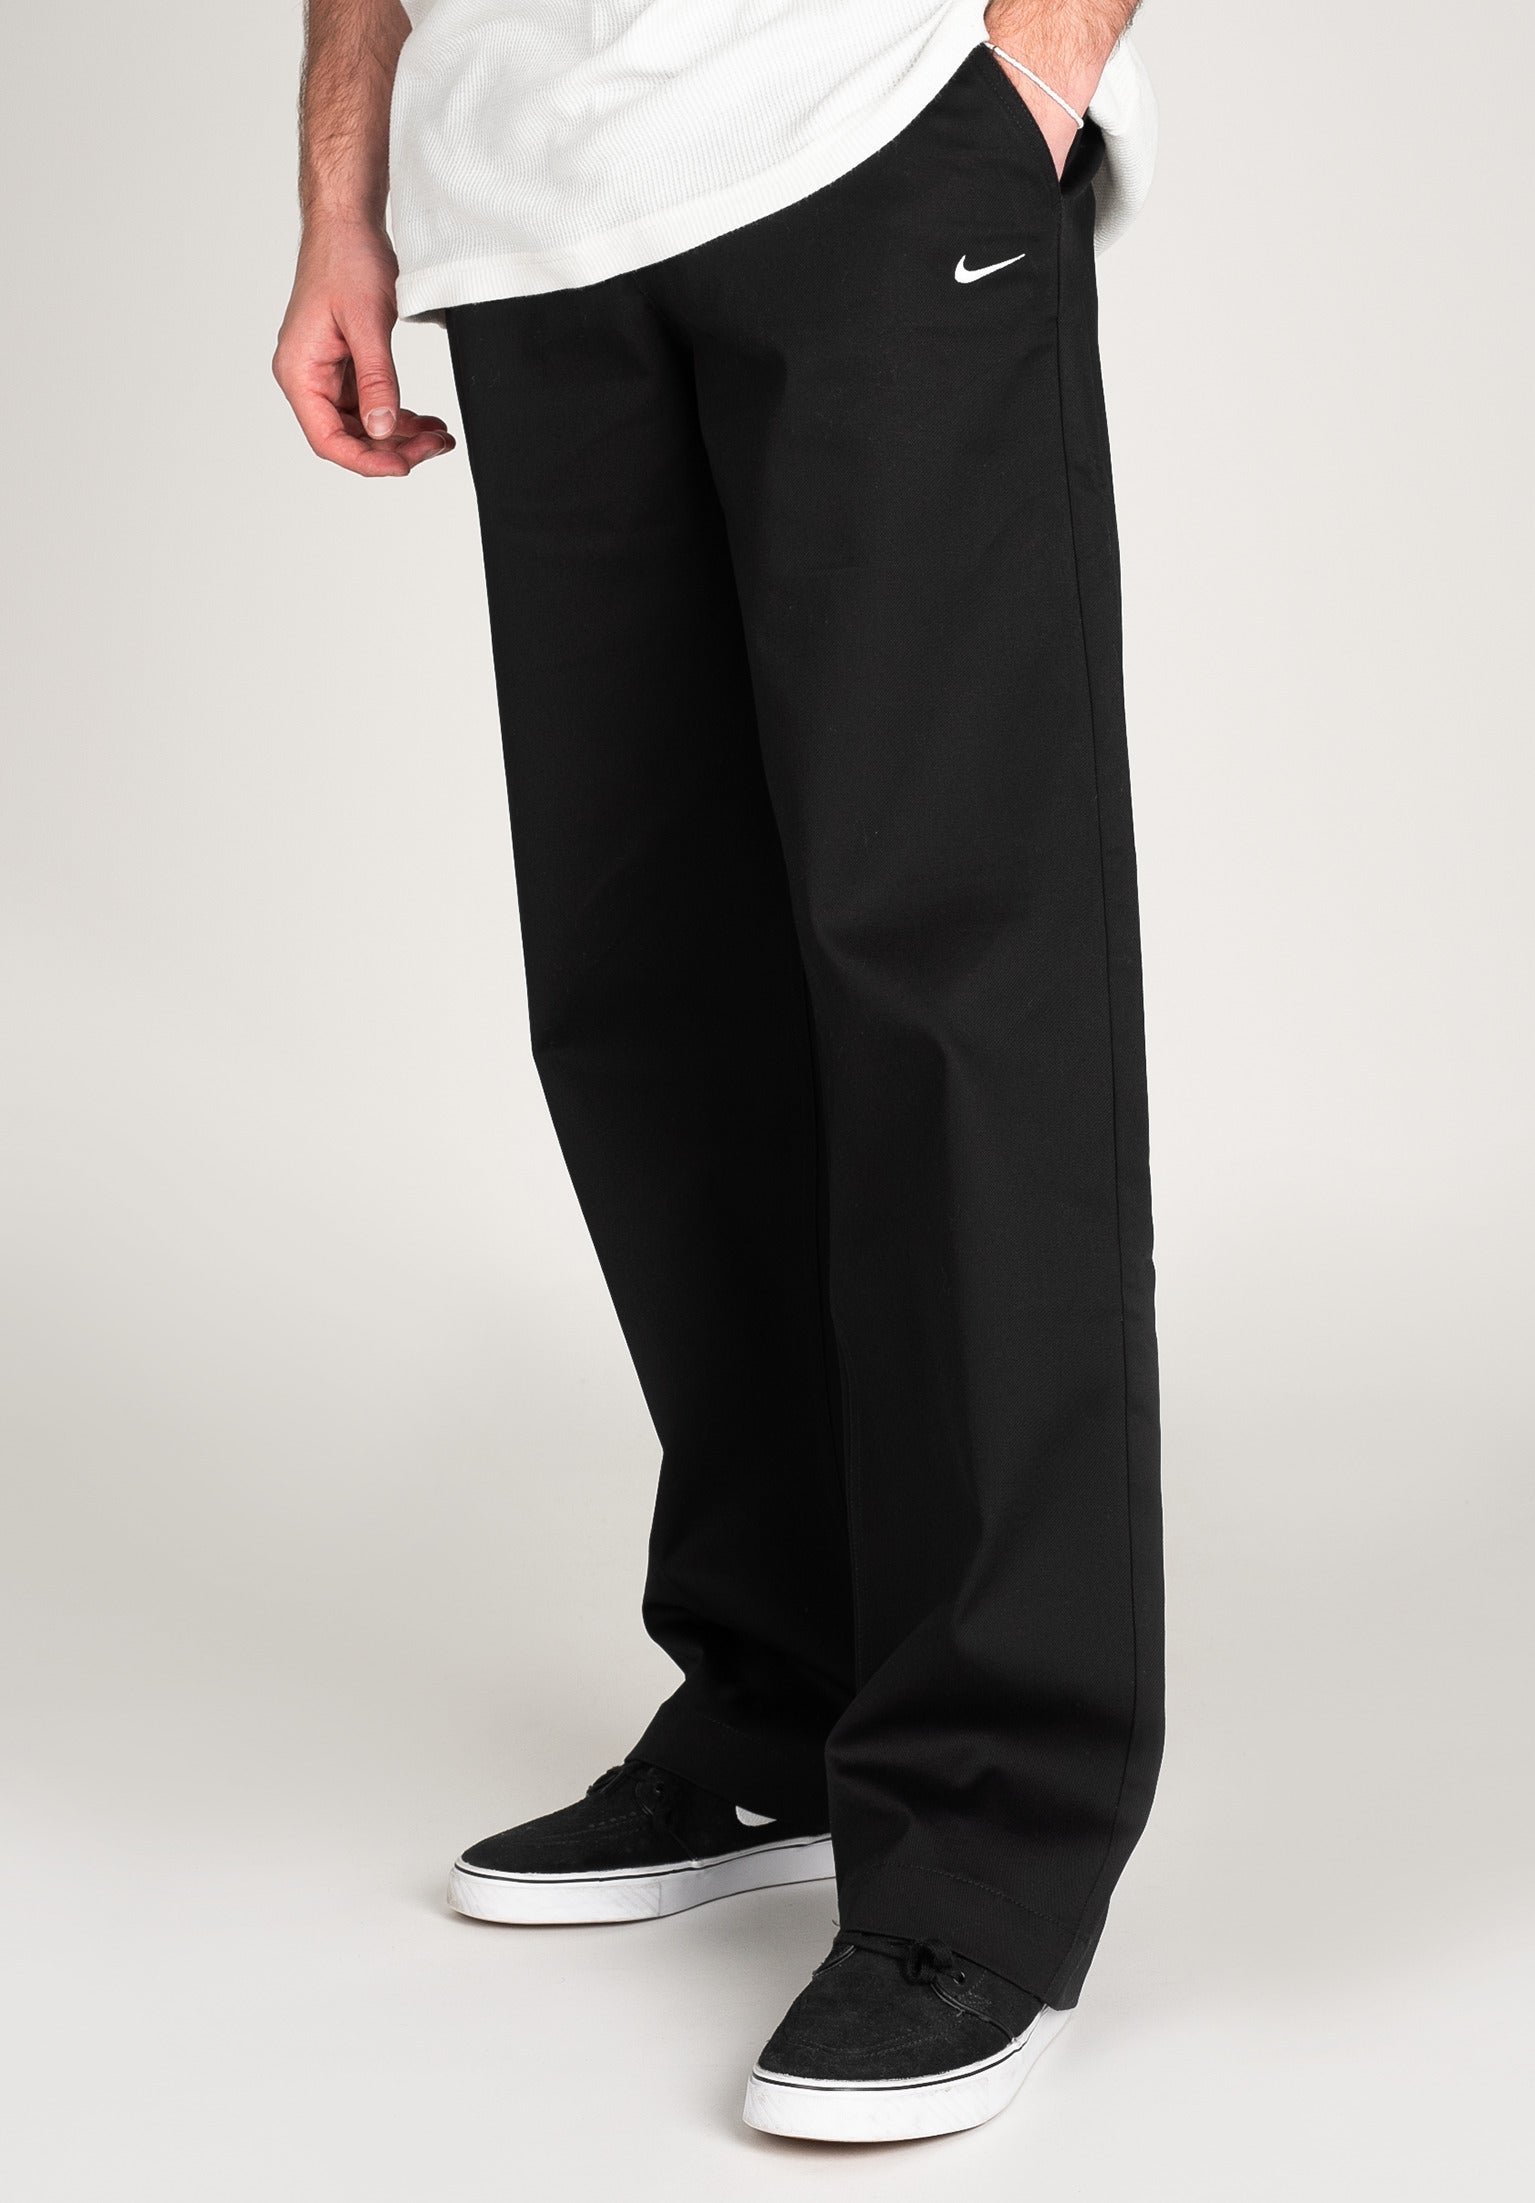 El Chino Pant Ul Cotton Nike SB Chino- / Cloth pants in black 